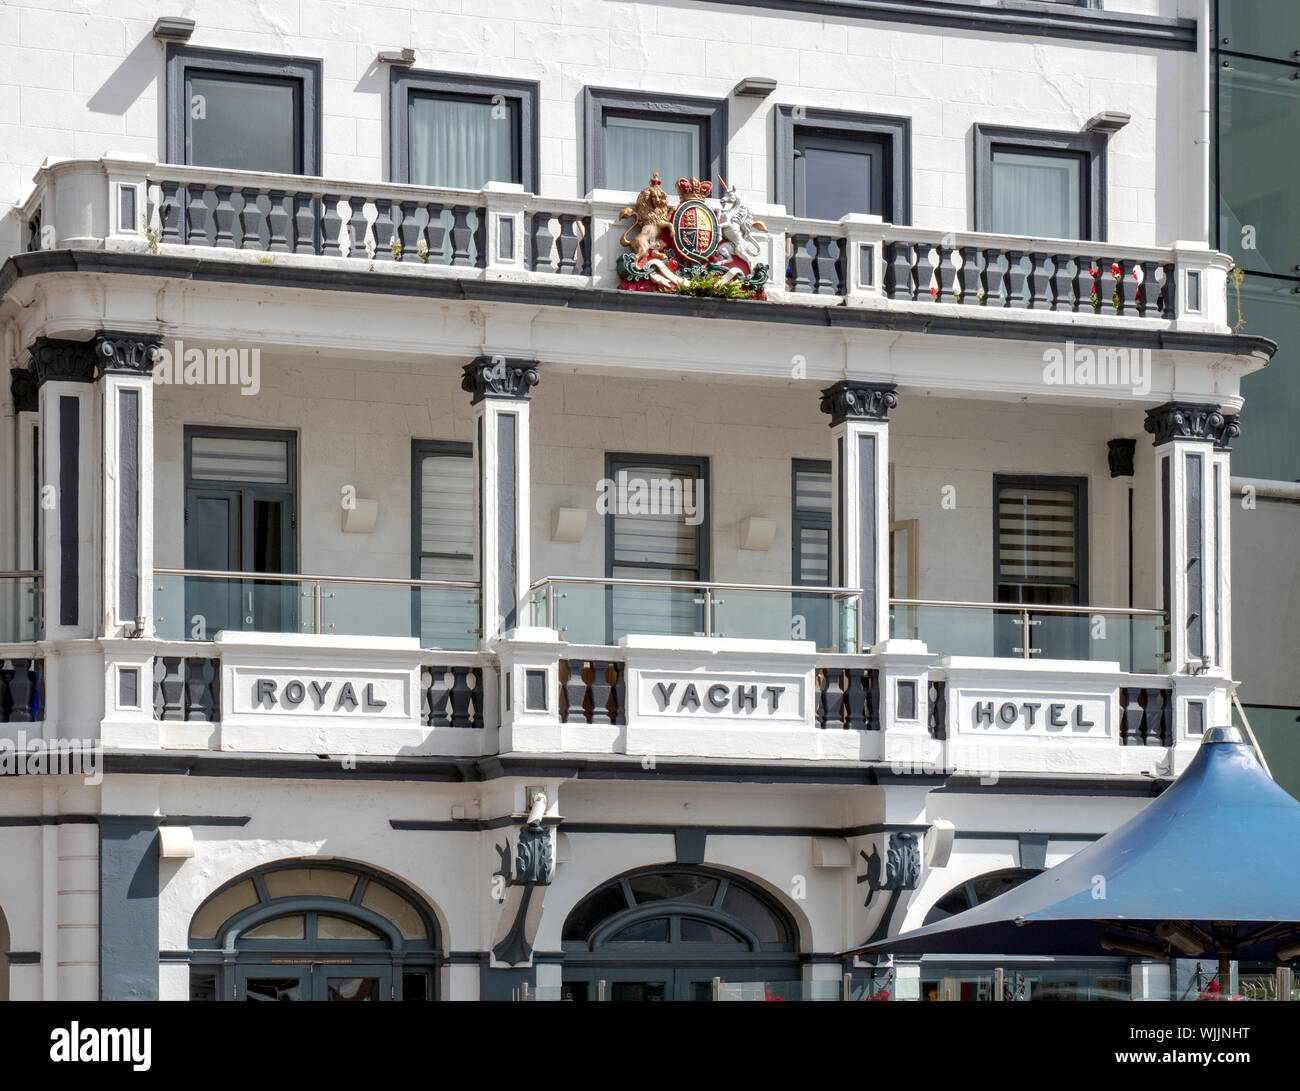 The Royal Yacht Hotel, Weighbridge, St Helier, Jersey, Channel Islands. JE2  3NF Stock Photo - Alamy